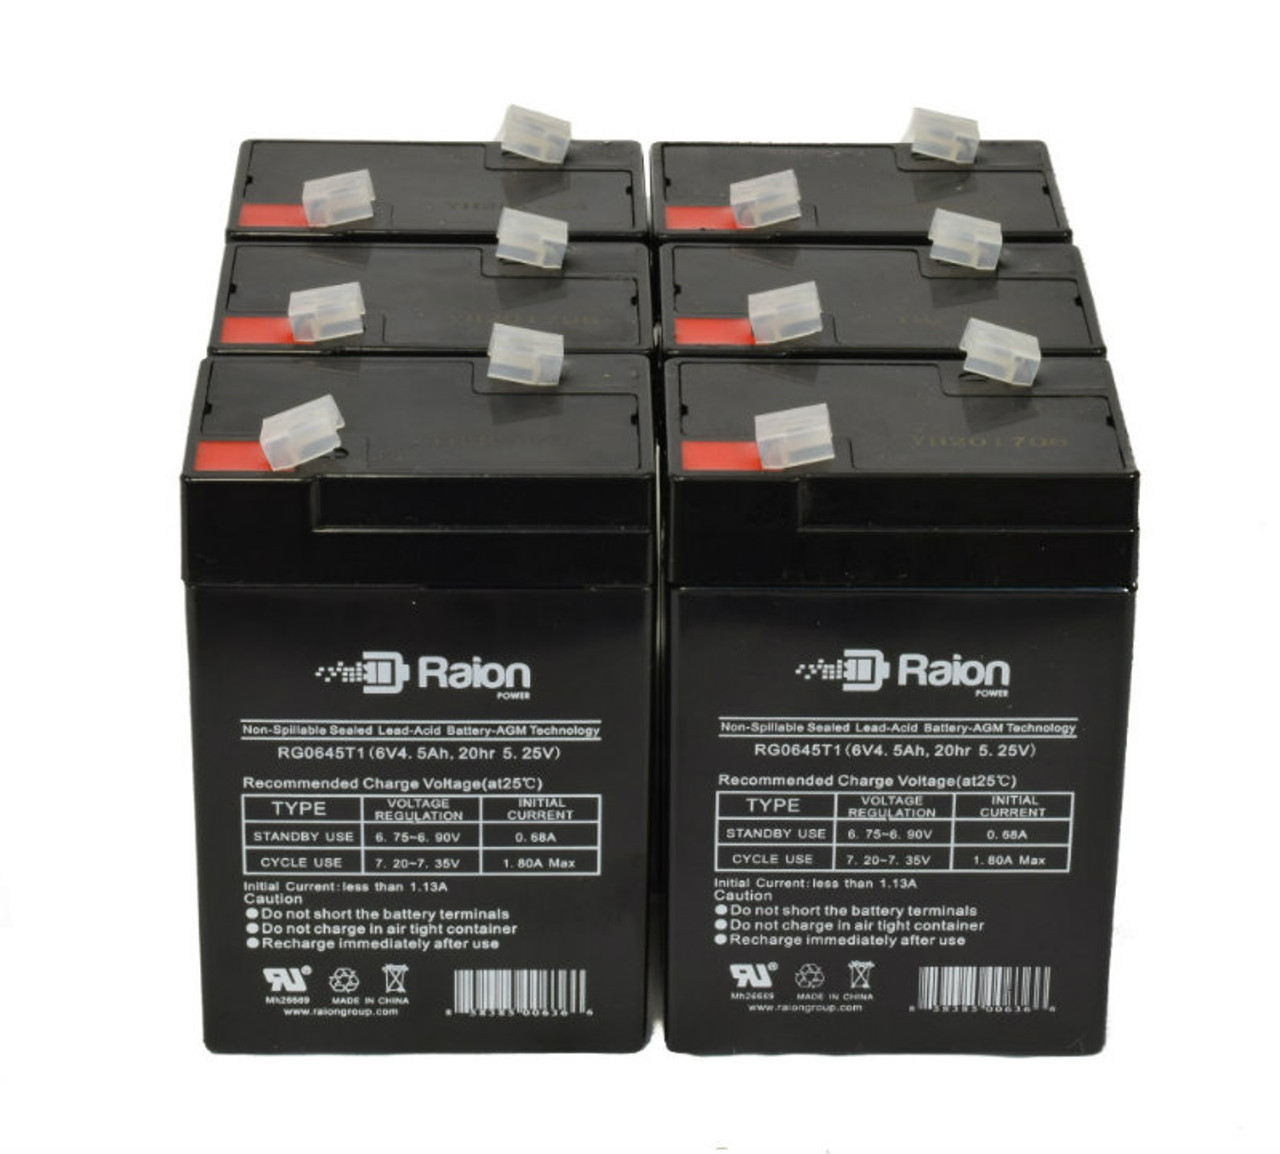 Raion Power 6V 4.5Ah Replacement Emergency Light Battery for Sure-Lites / Cooper Lighting SL-26-02 - 6 Pack